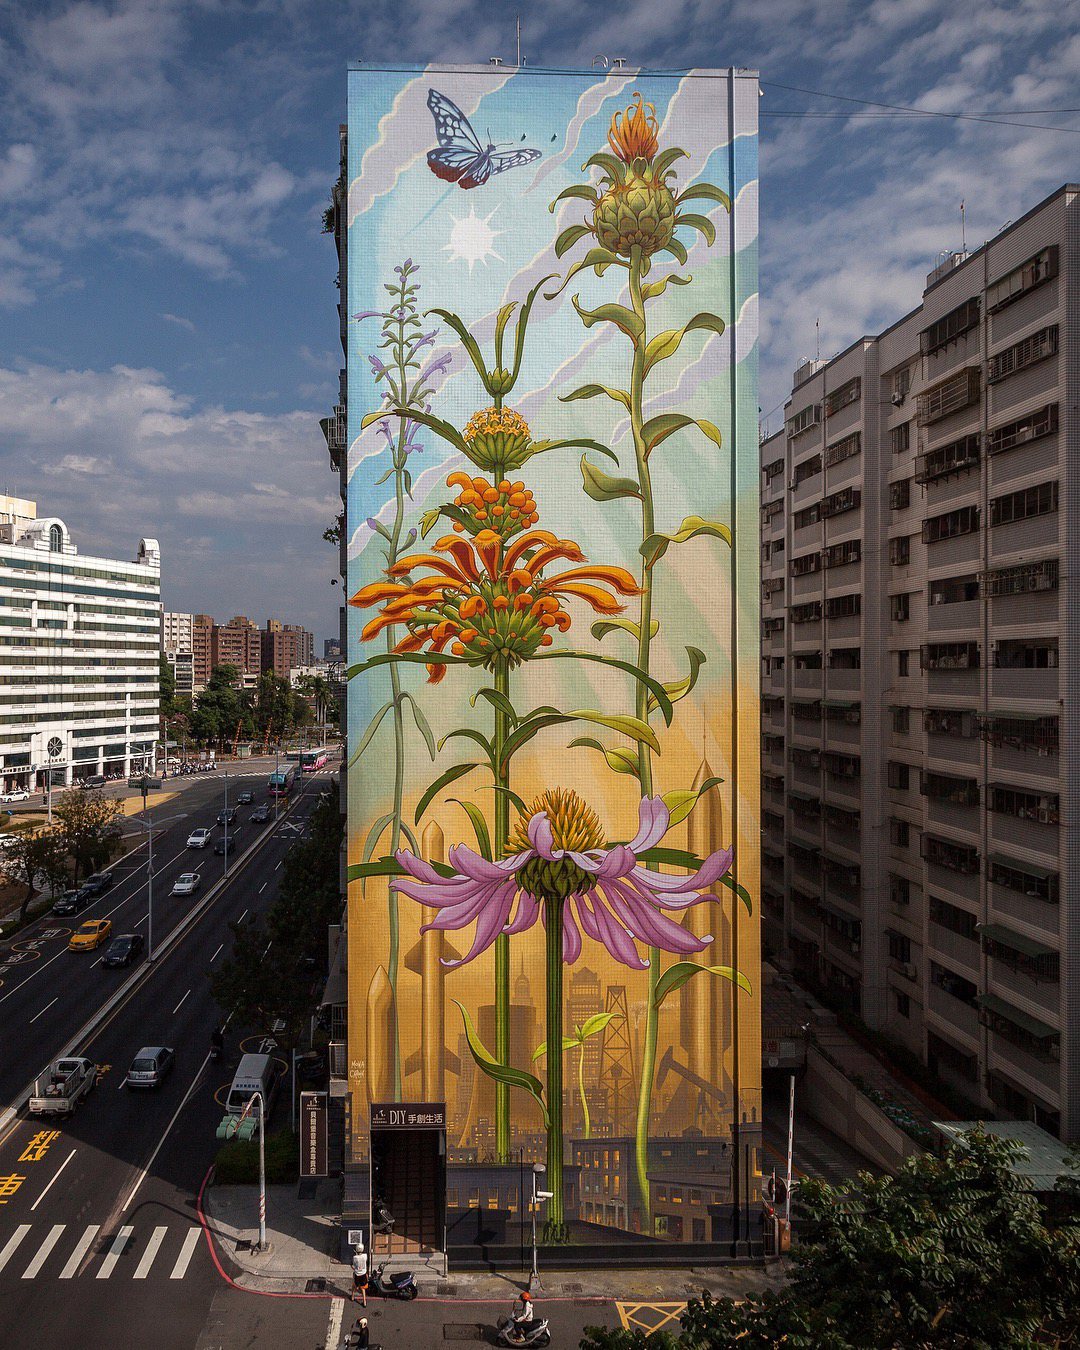 Marvelous Giant Murals Of Weeds In Bloom By Mona Caron 1